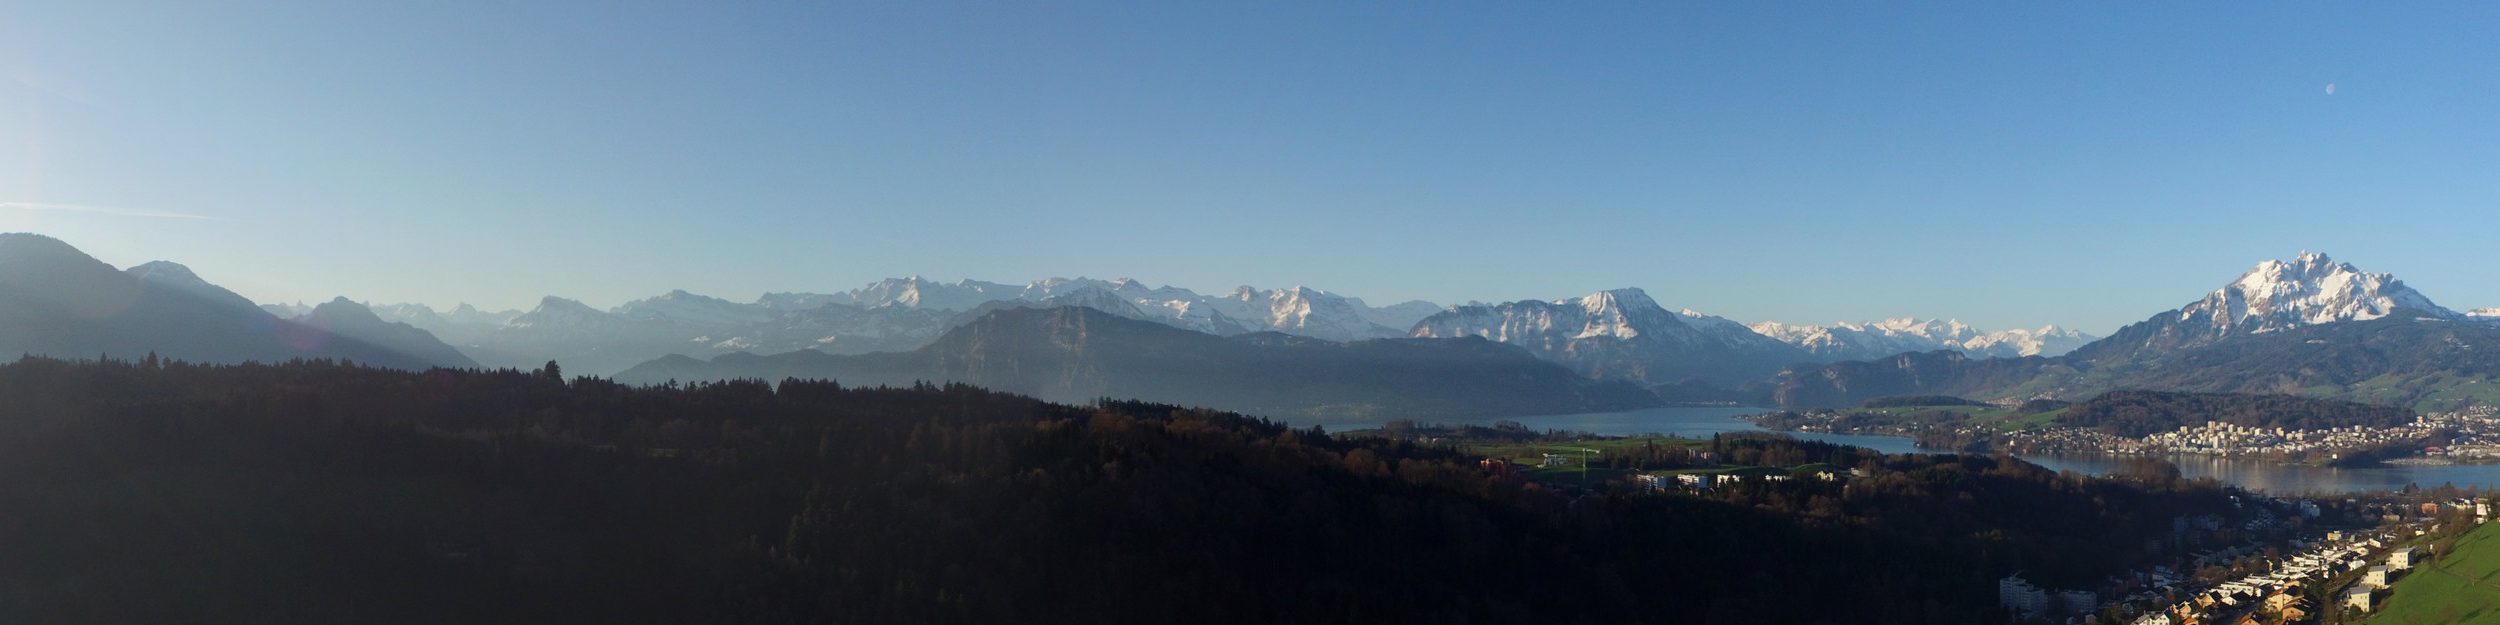 Homepage des Skiclub Alpina Luzern